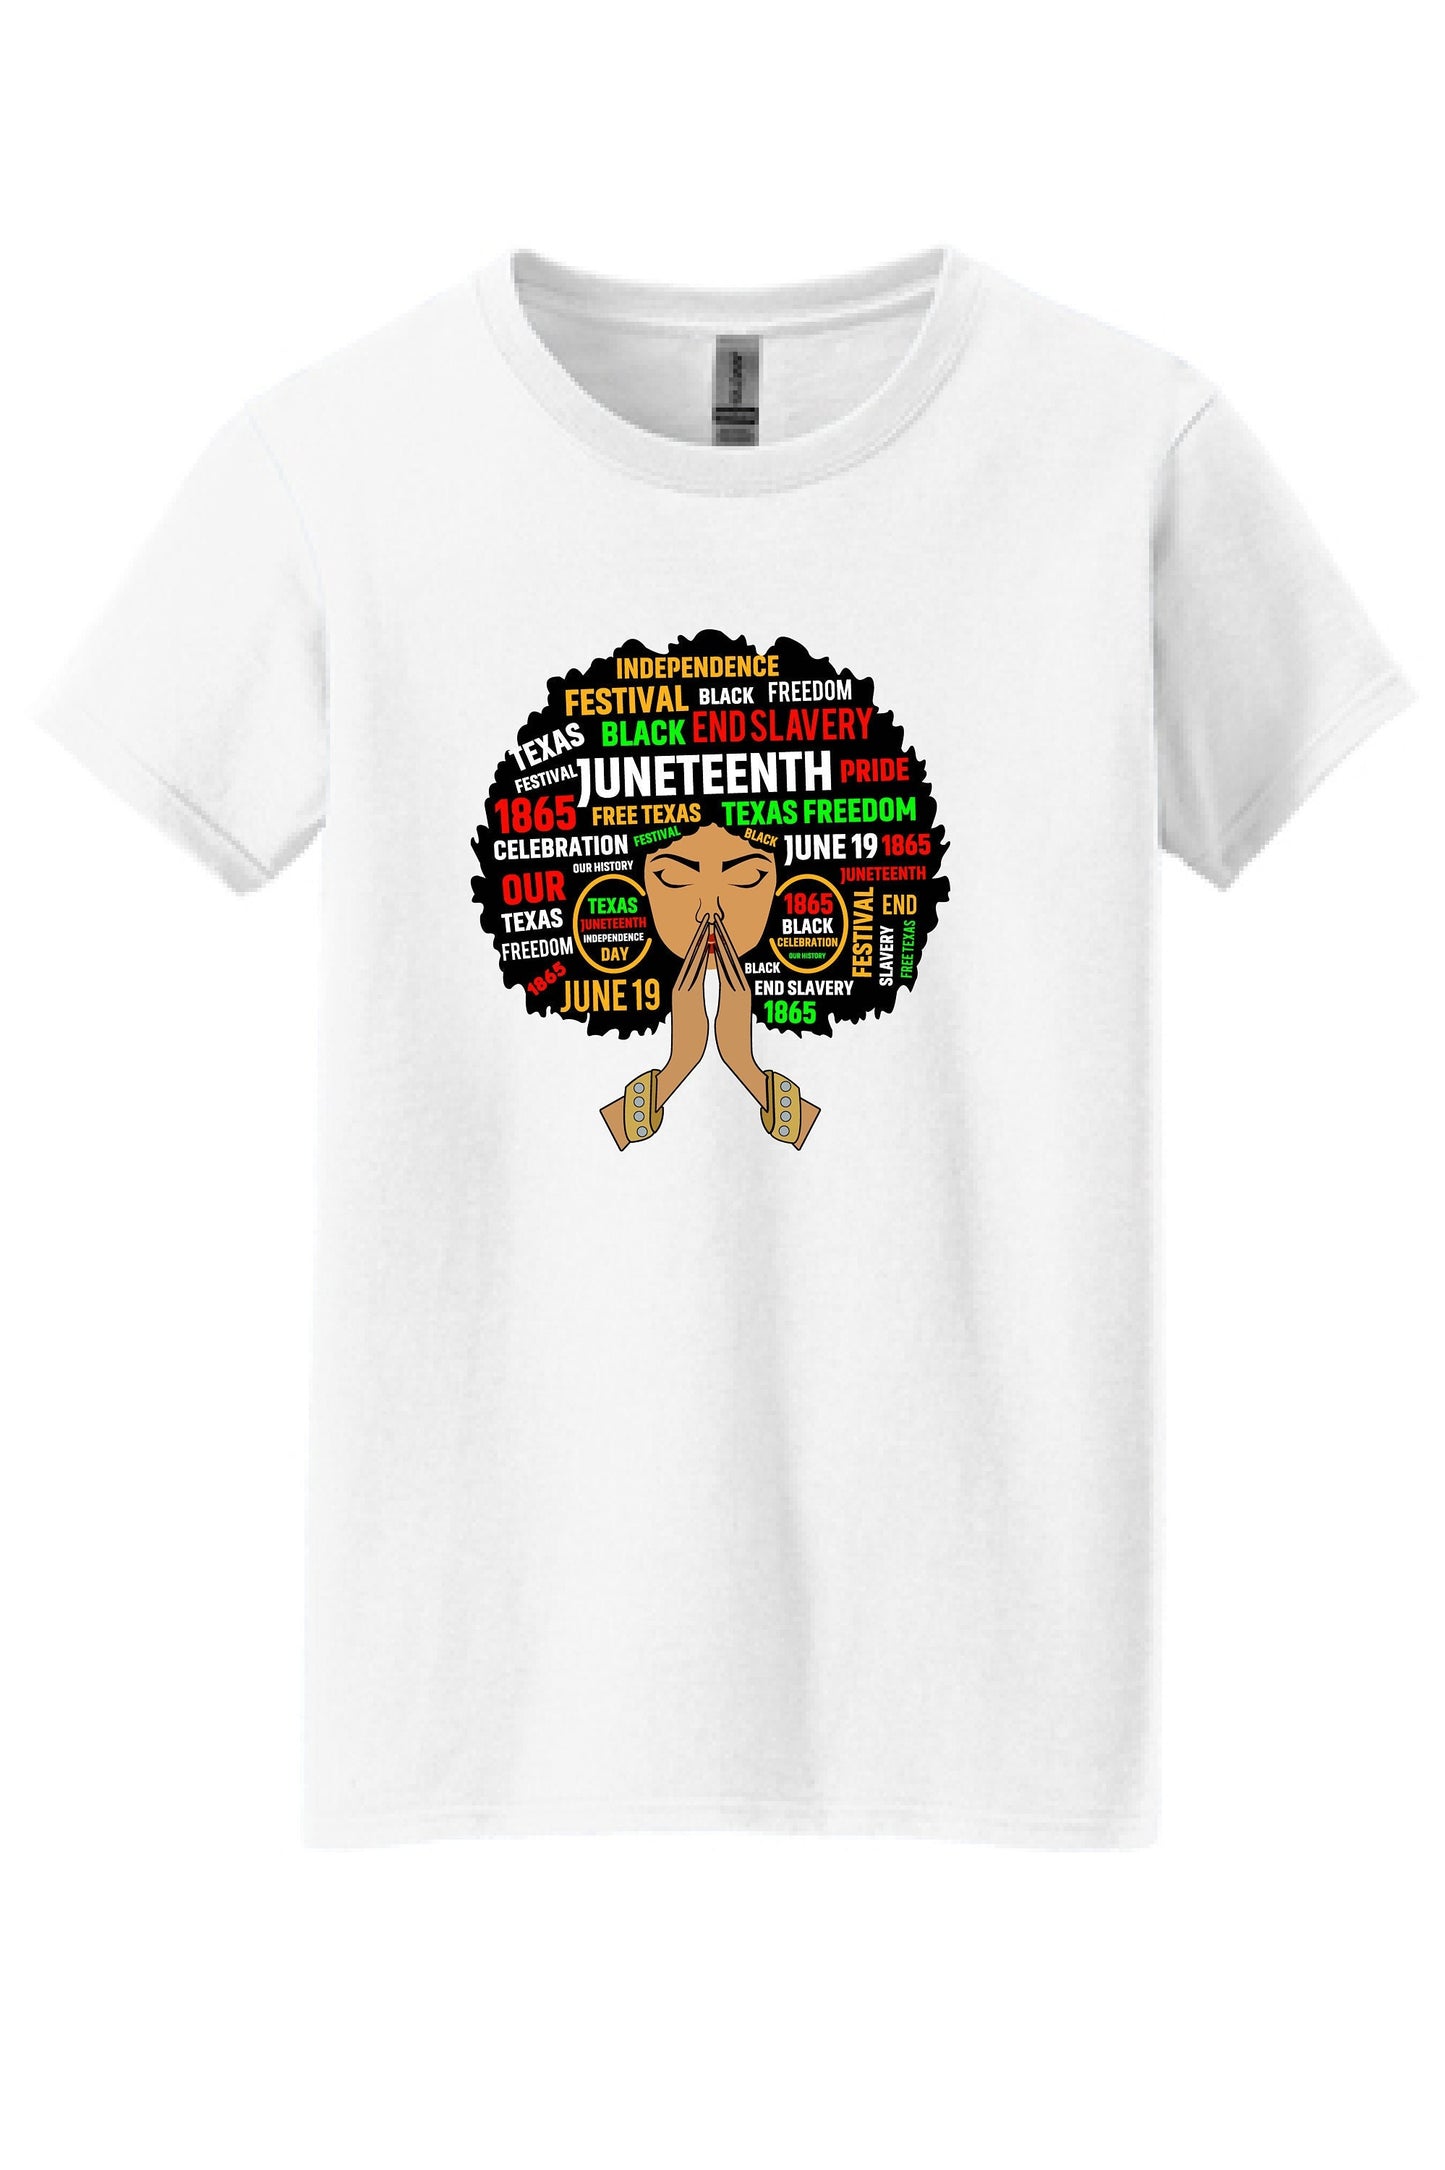 Embrace Freedom: Juneteenth Celebration Ladies Afro T-Shirt - Uniting Heritage and Hope